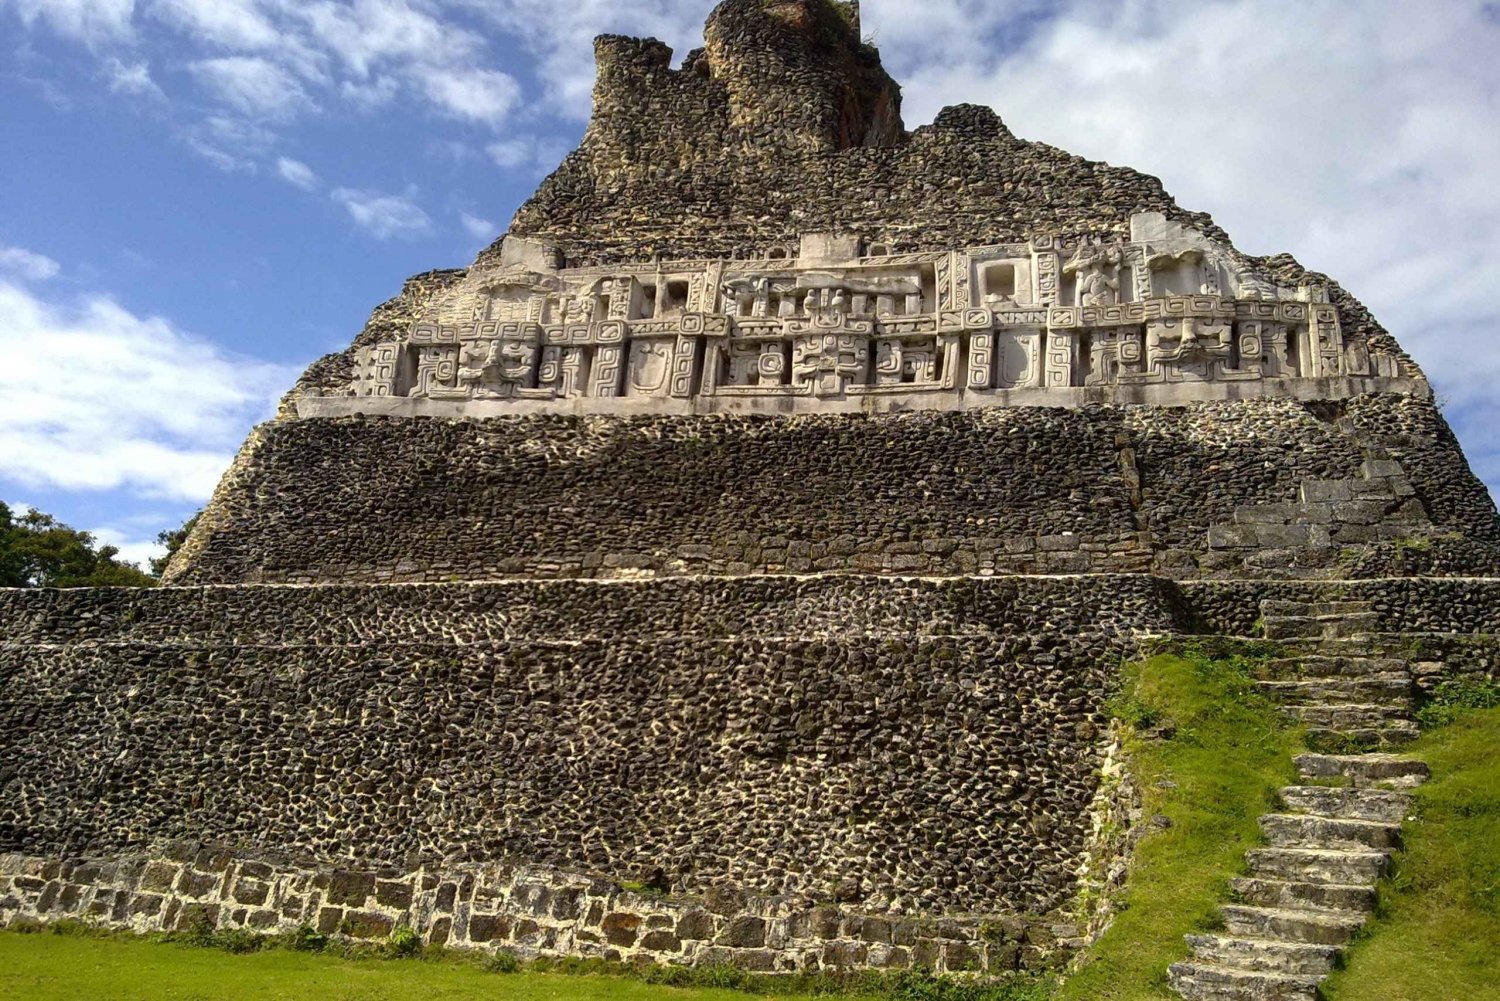 Sail-the-Rio-Hondo-to-Reach-the-Remote-Mayan-Ruins-of-Cuello